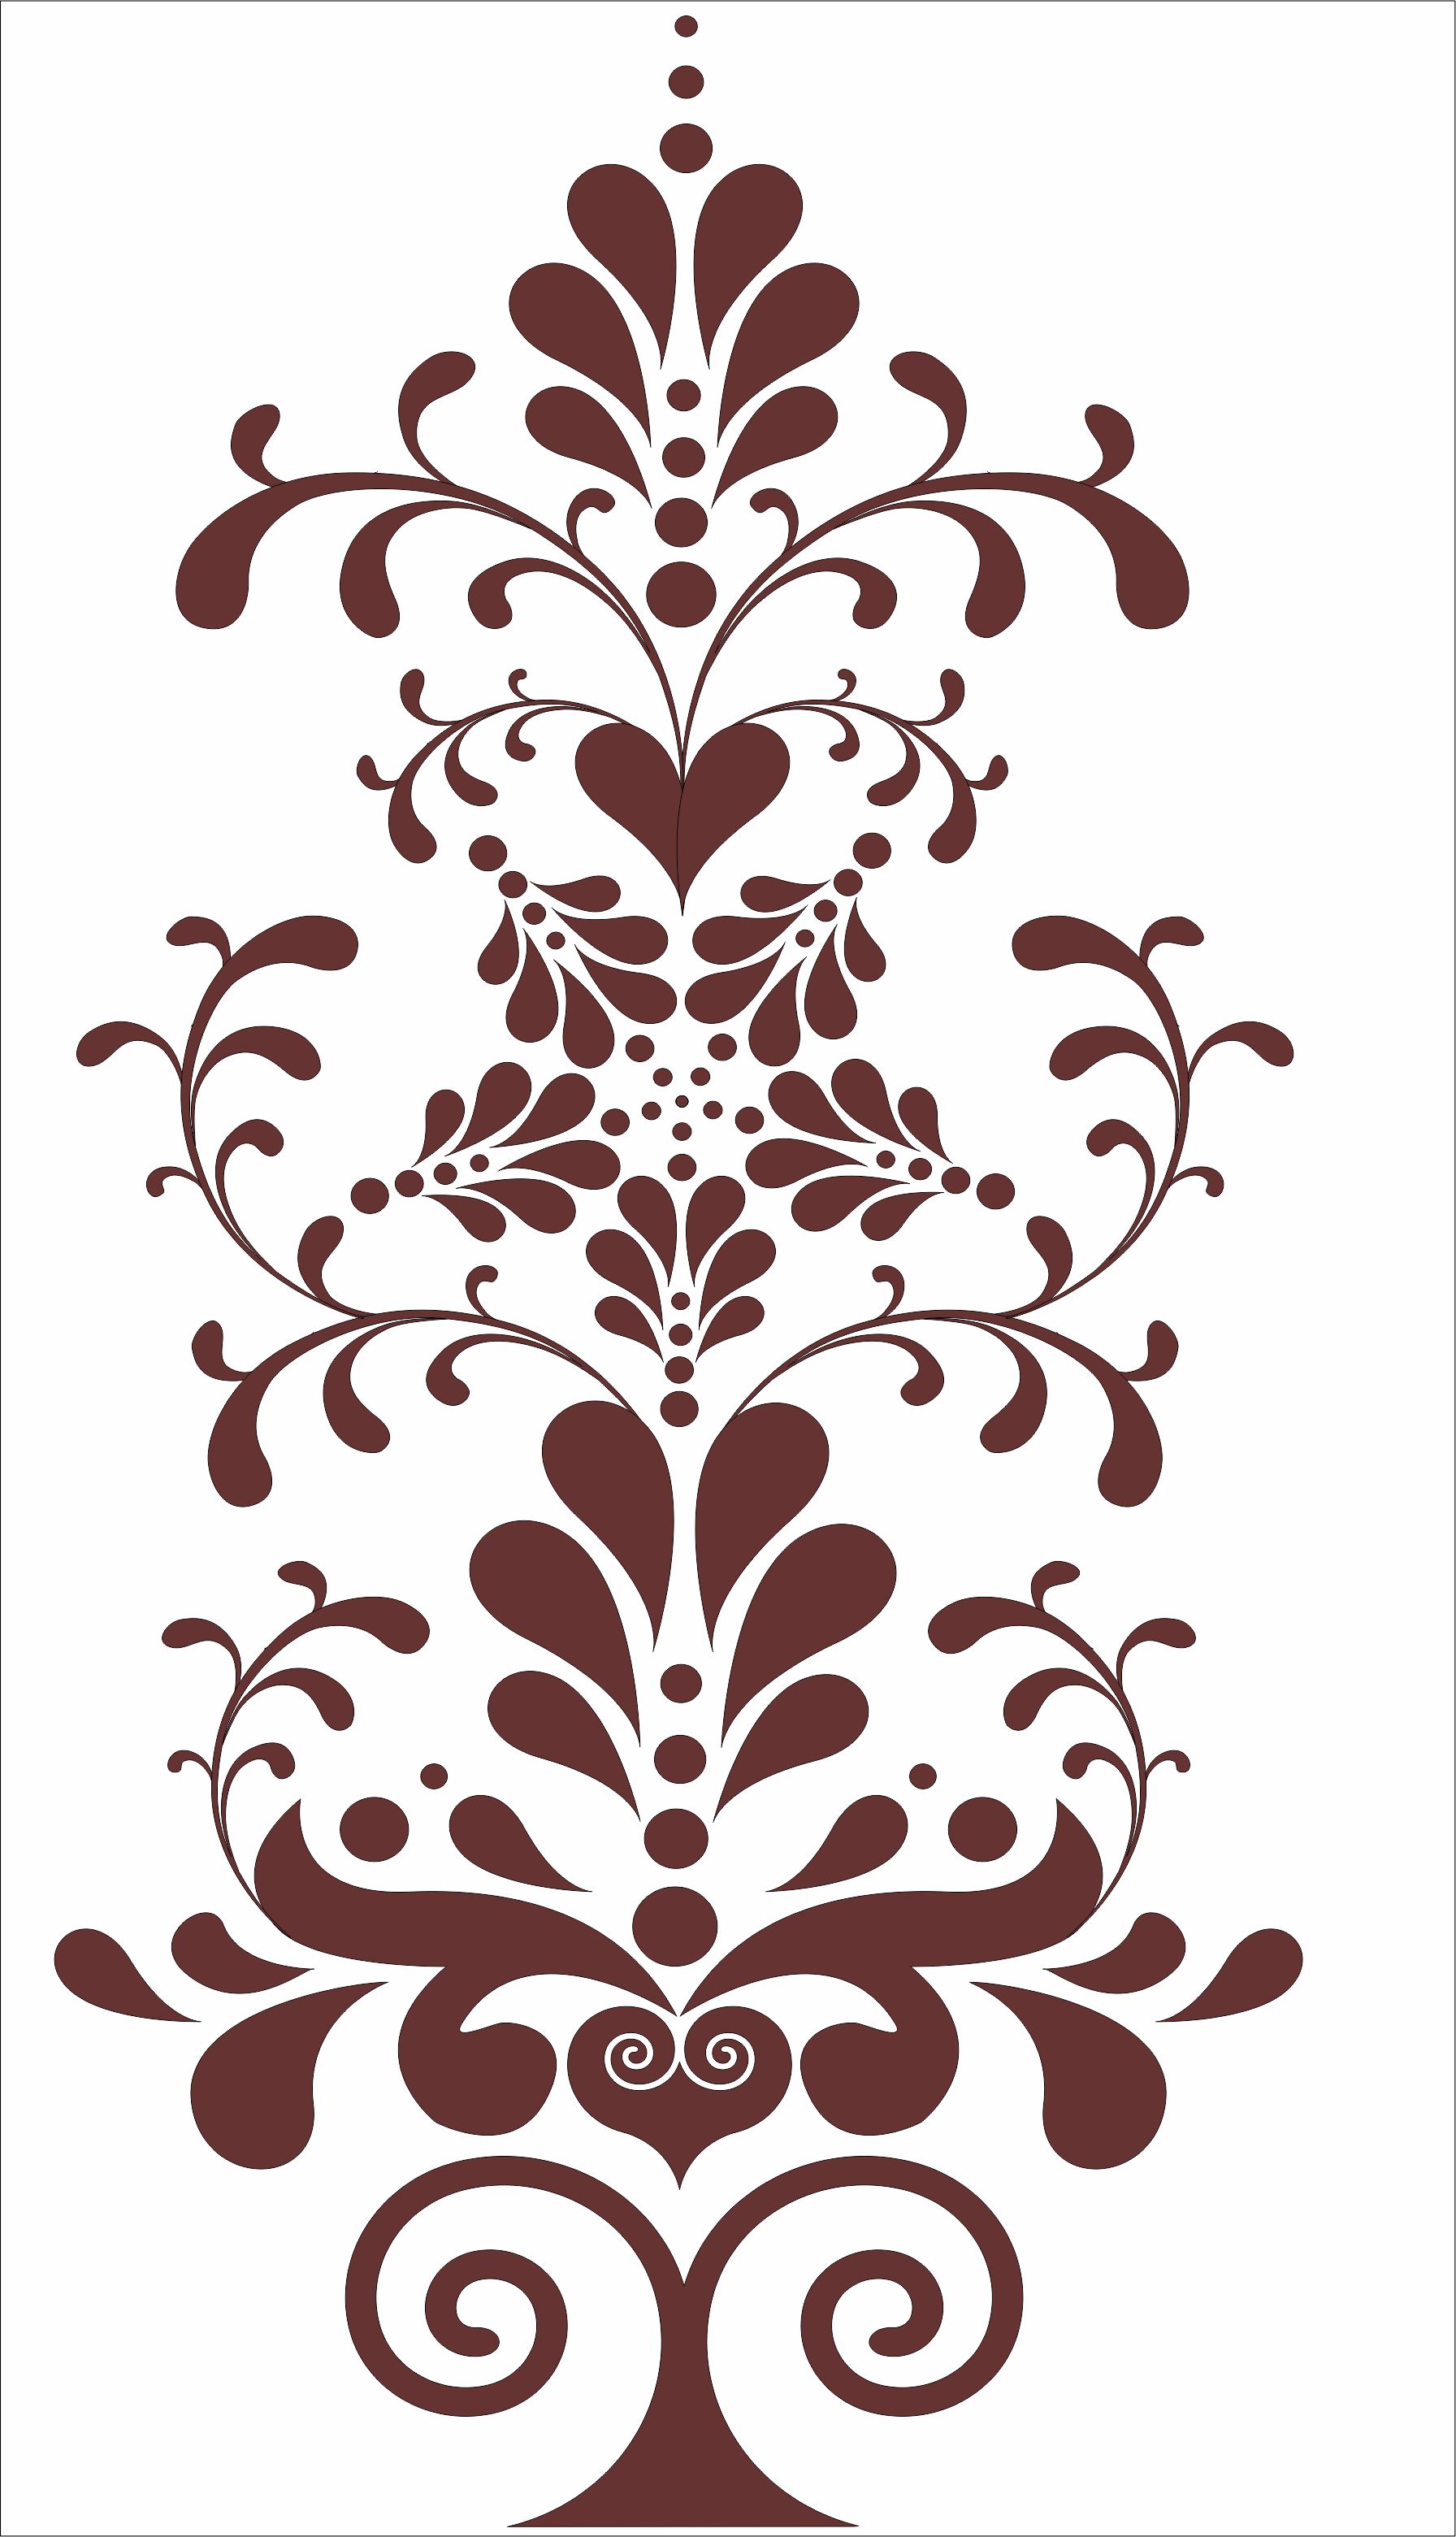 Decorative Floral Flower Pattern Design For Laser Cutting Free DXF File